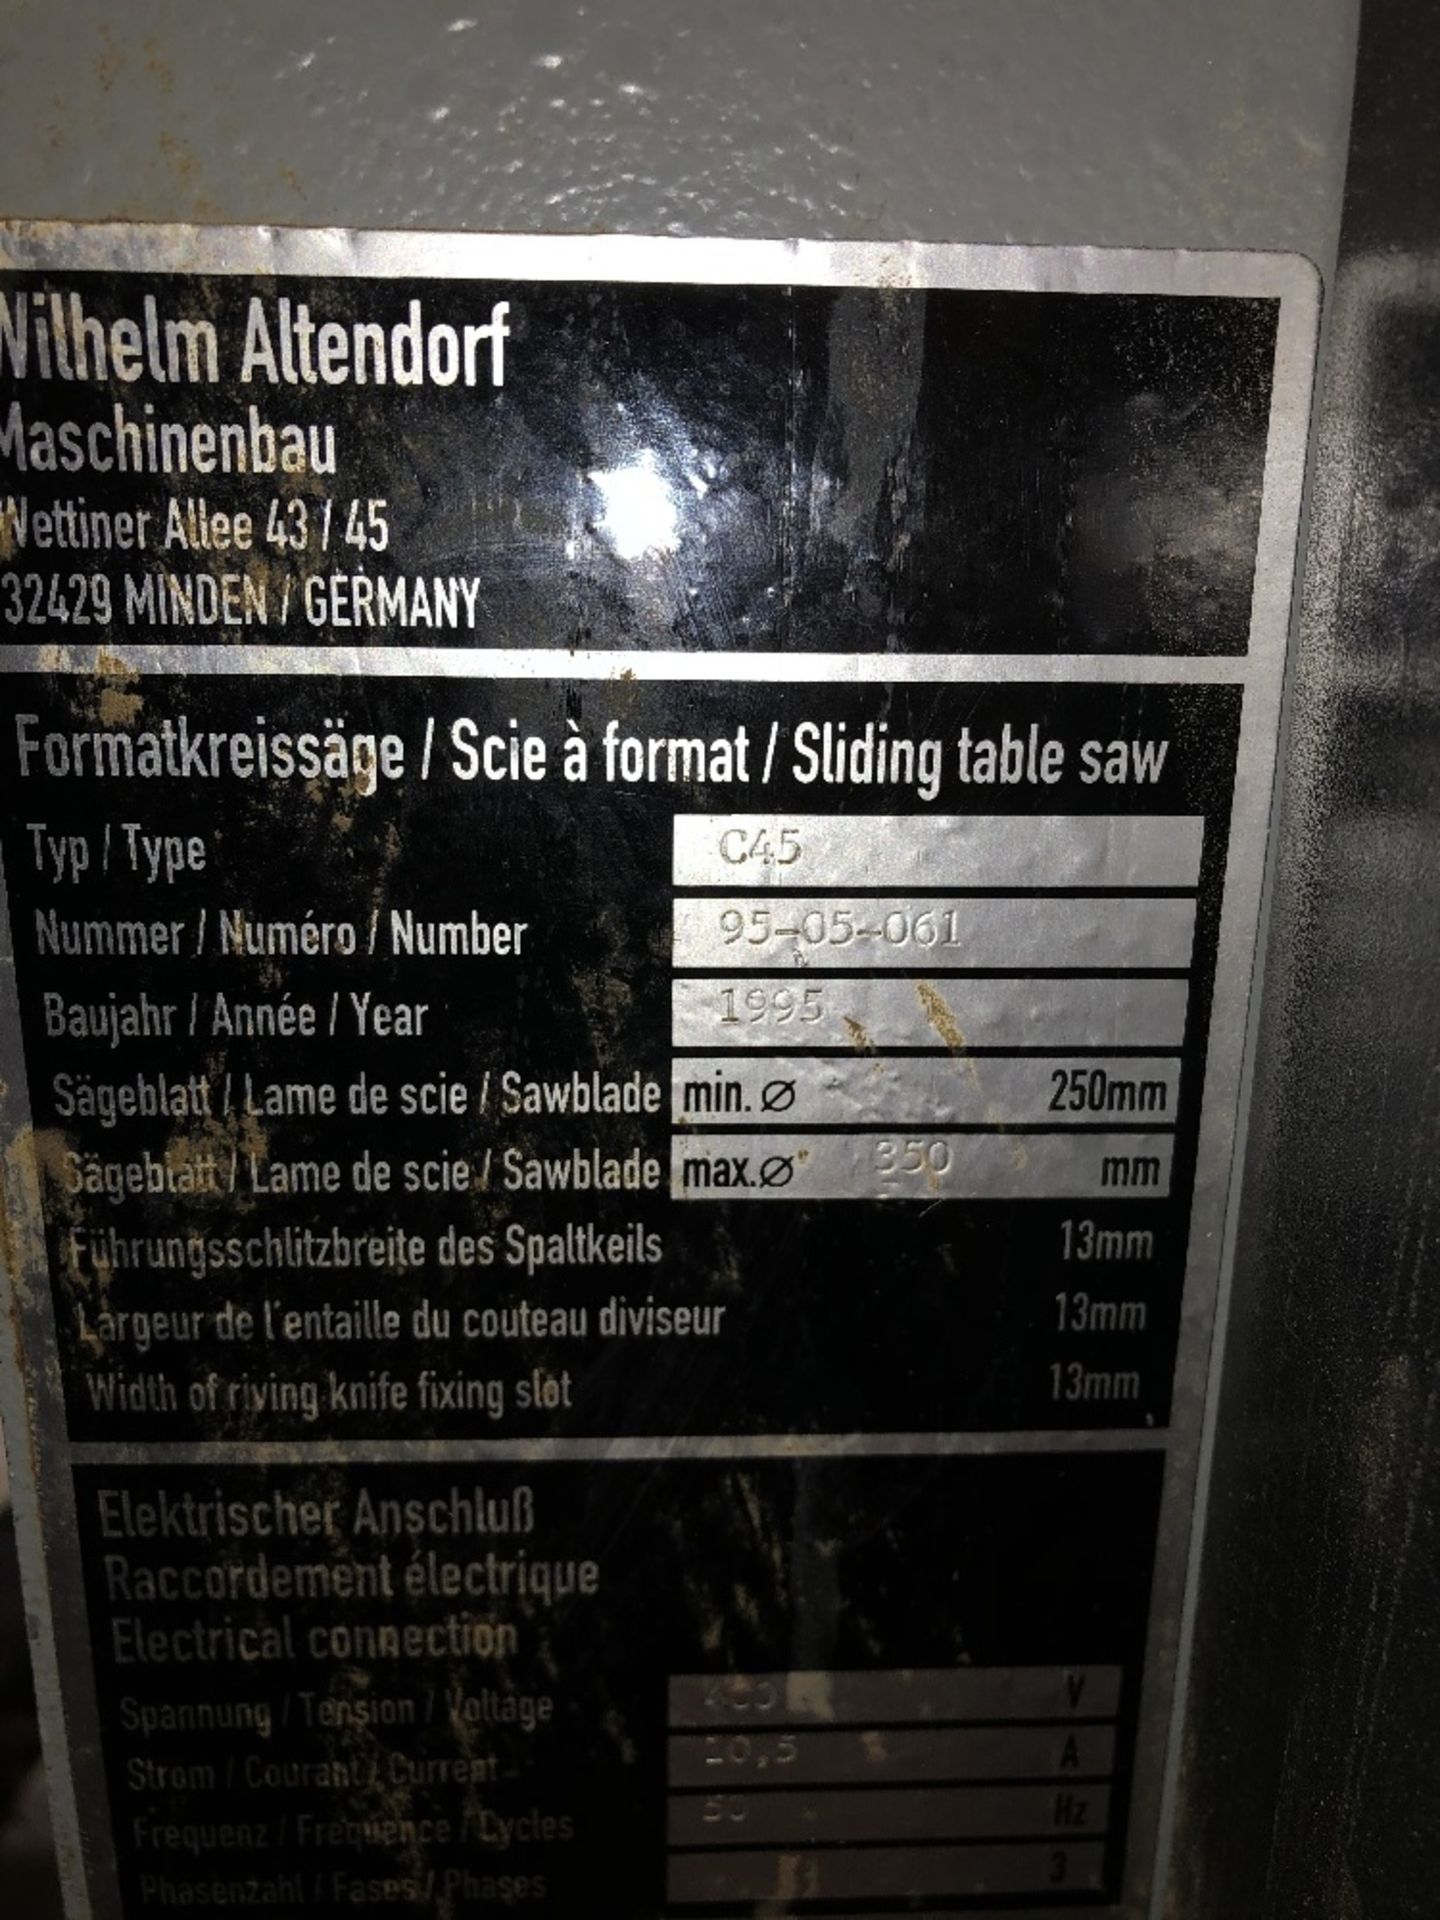 Altendorf C45 Compact Panel Saw - Image 6 of 7